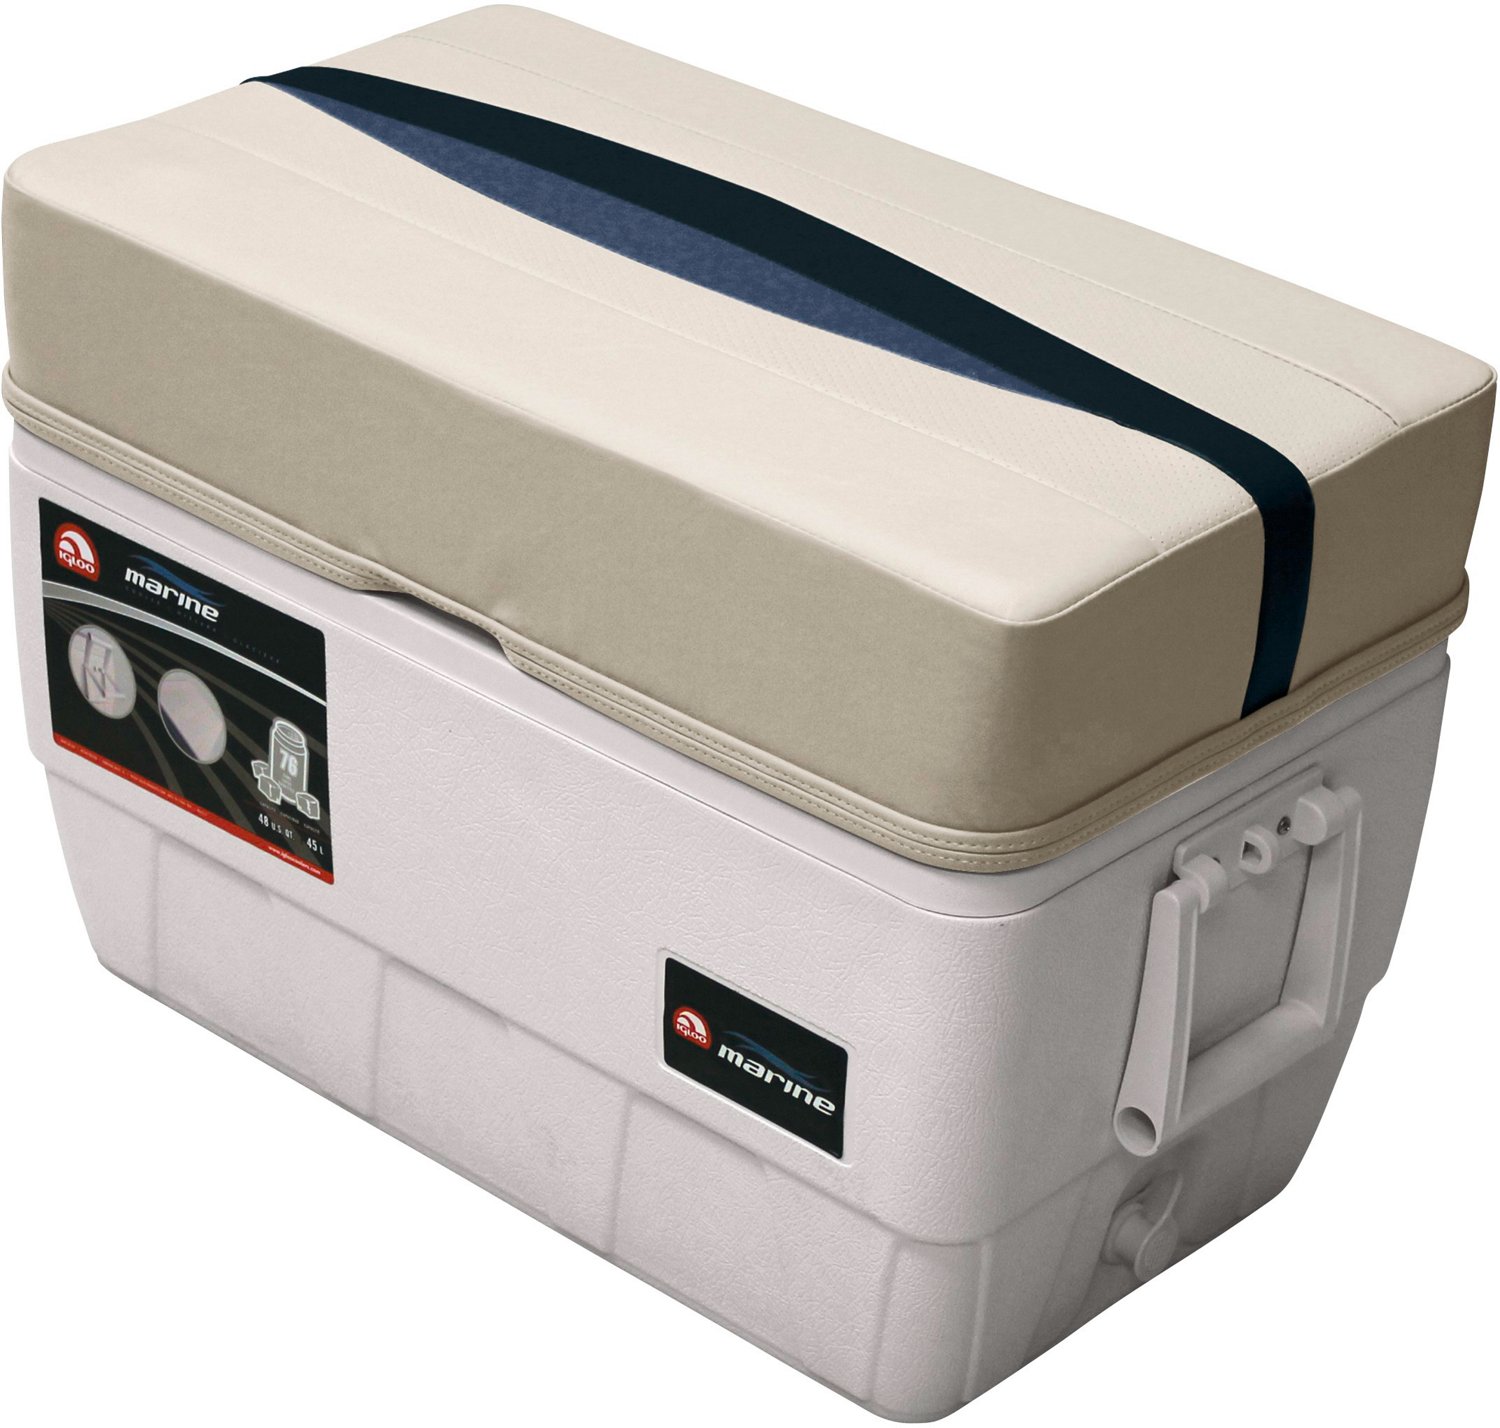 Seachoice Cooler Cushion fits 48 Qt., White 76811 - The Home Depot